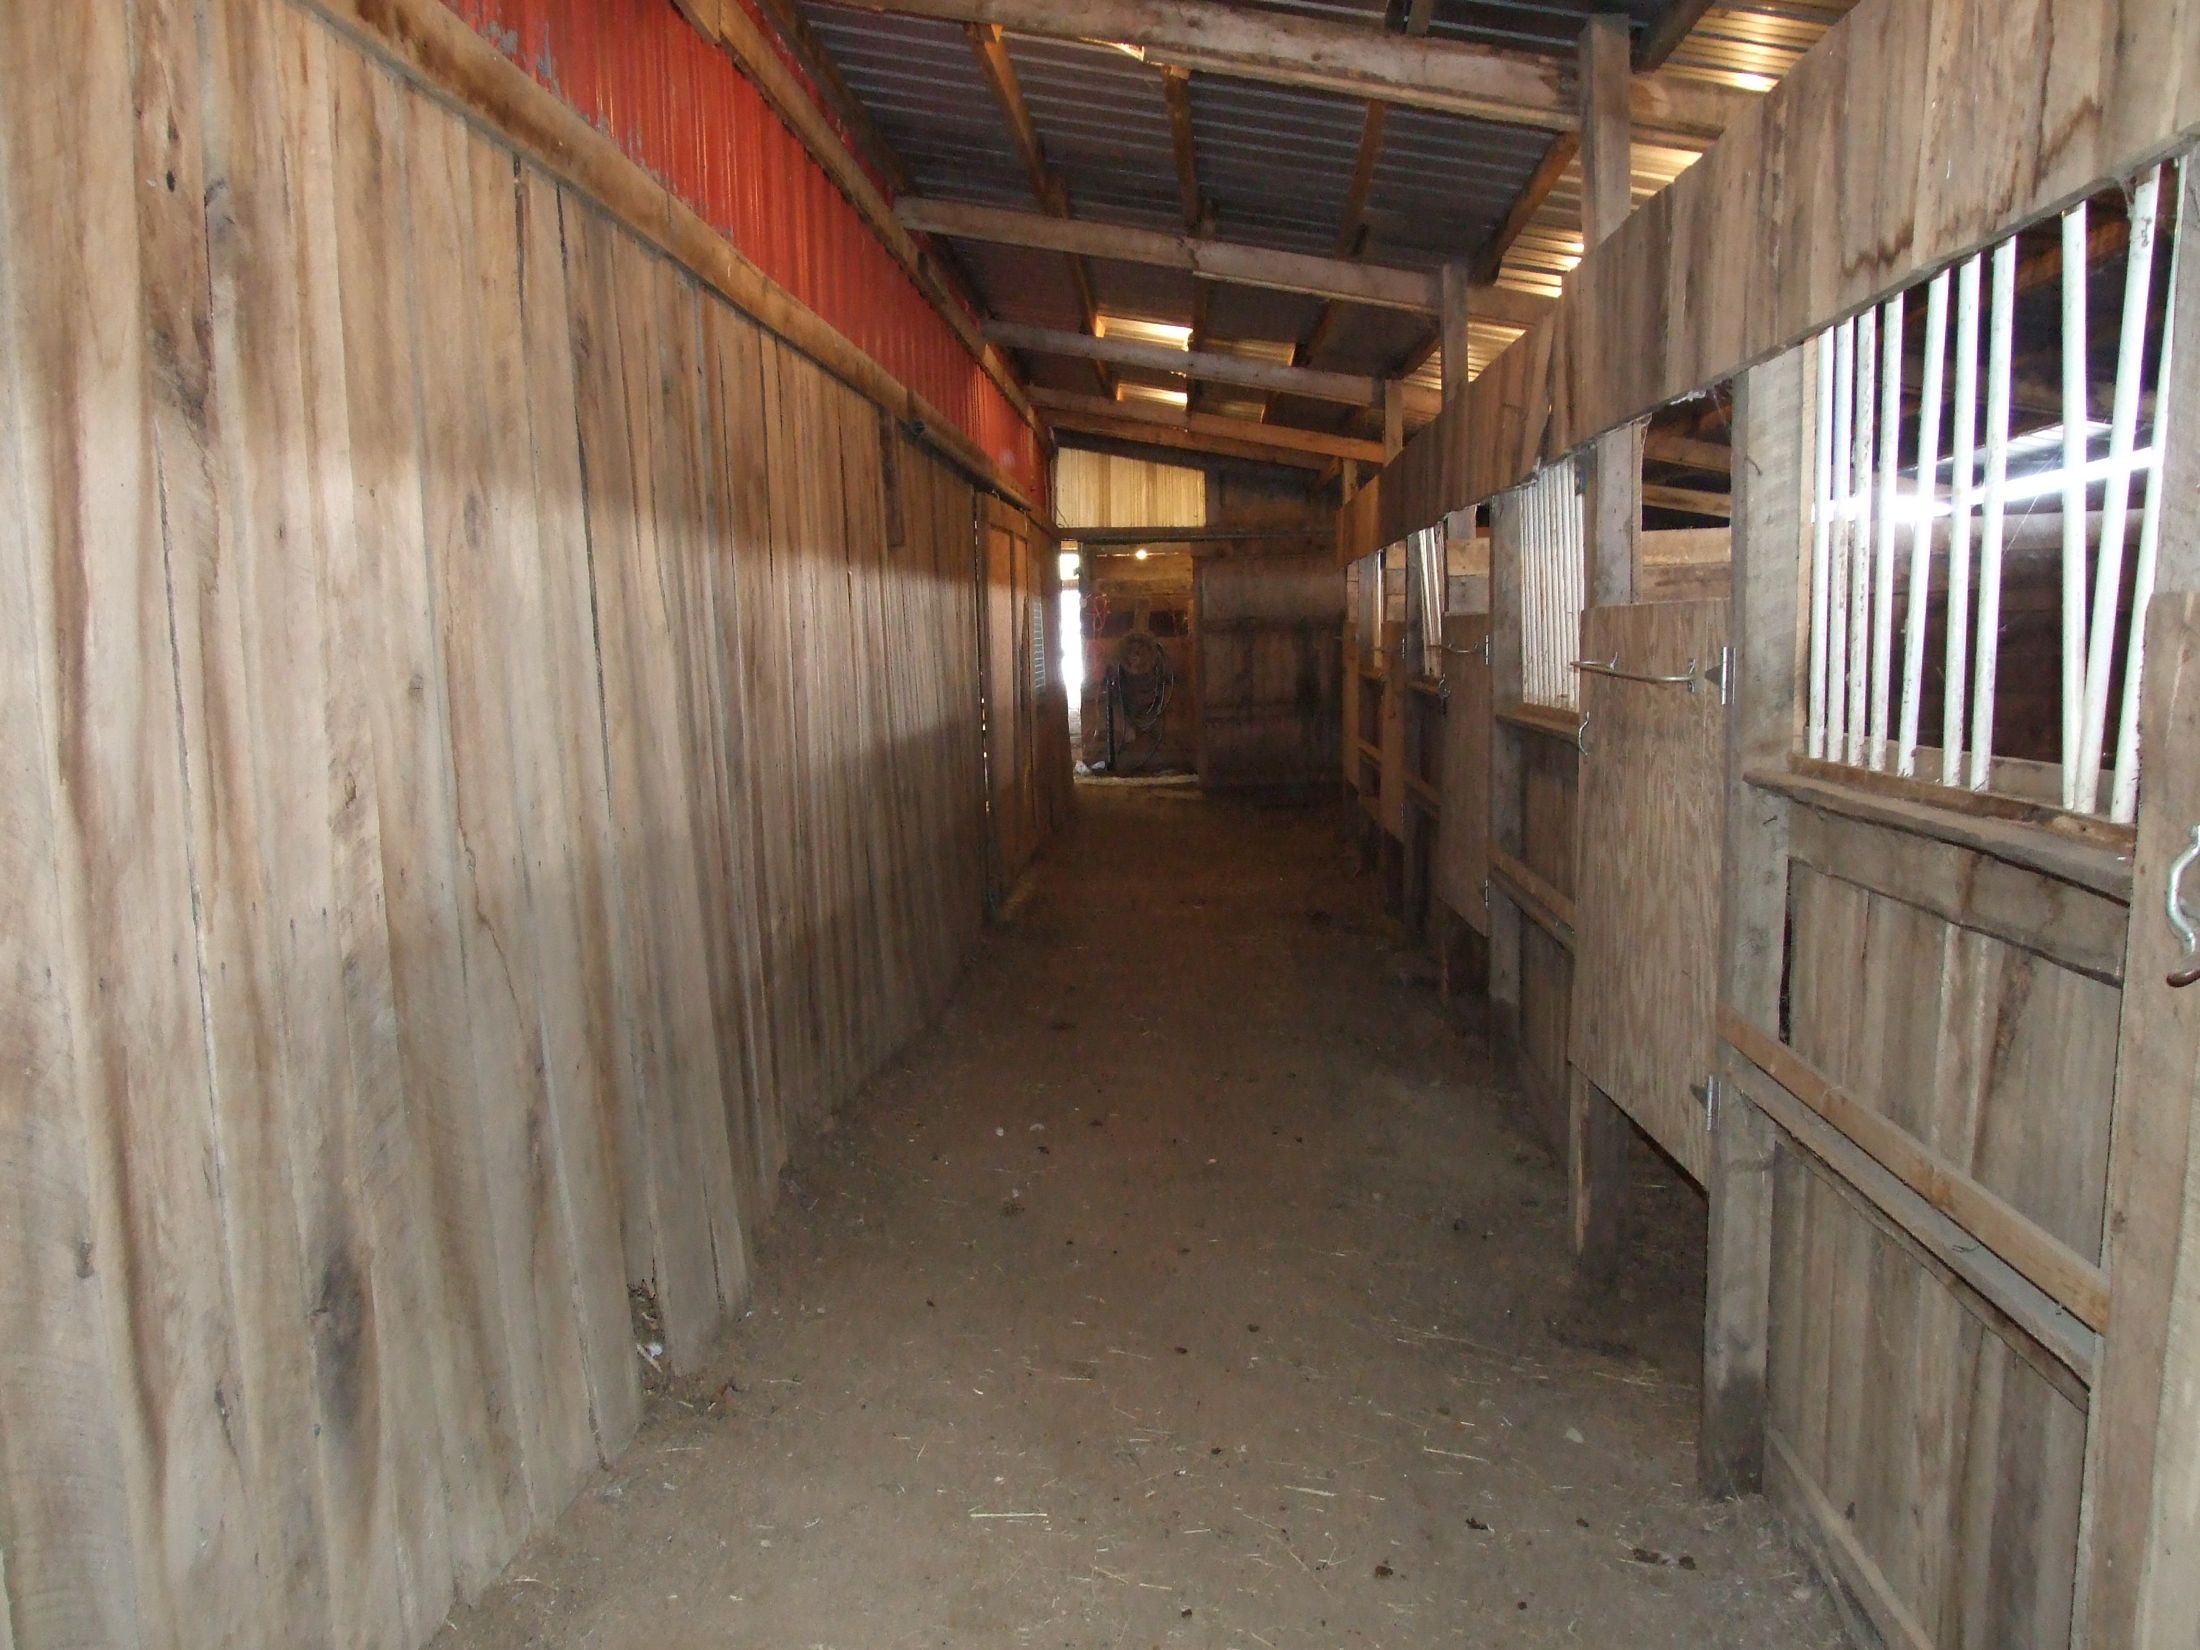 Secondary Aisle of Barn